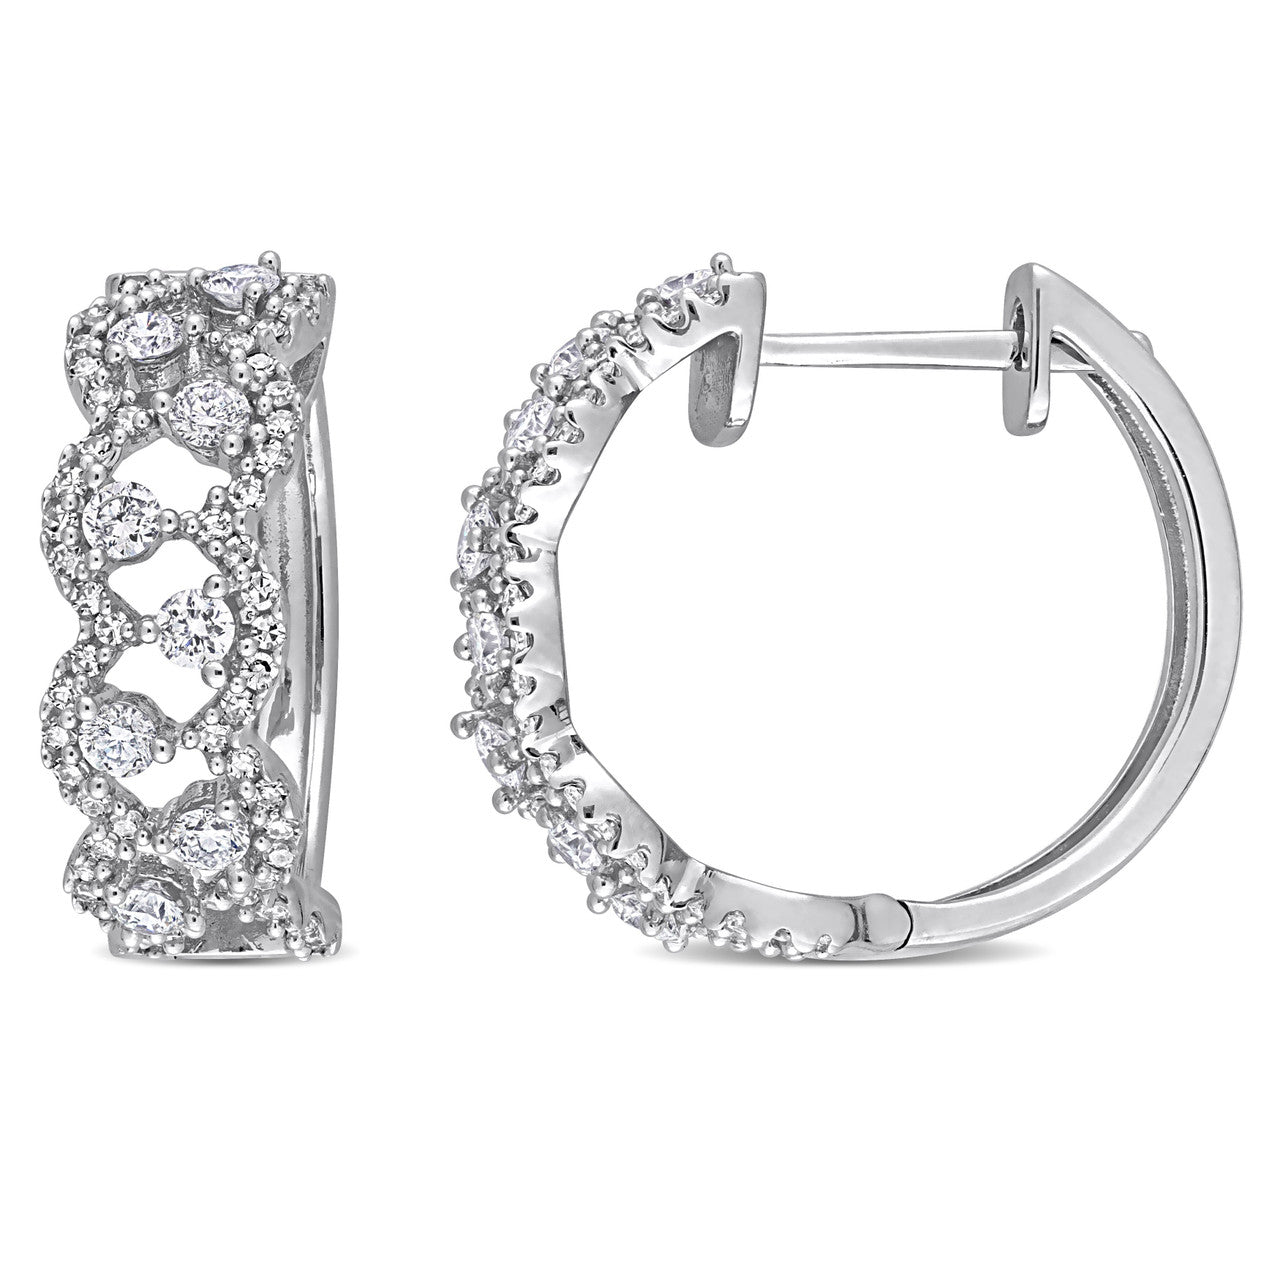 Ice Jewellery 1 CT Diamond Hoop Earrings in 14k White Gold - 75000005740 | Ice Jewellery Australia